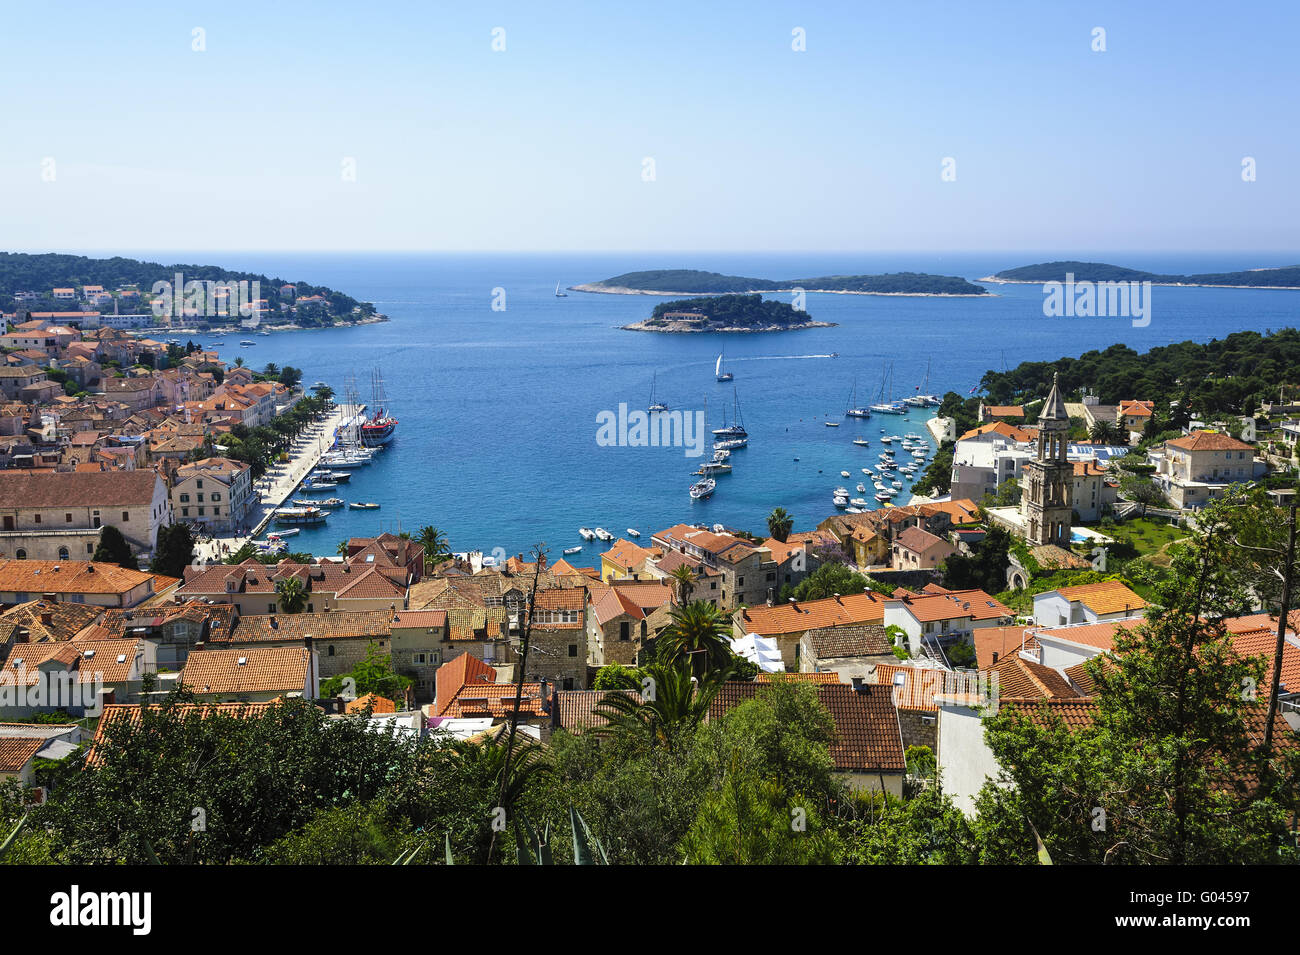 The port of Hvar on the Croatian island of Hvar Stock Photo